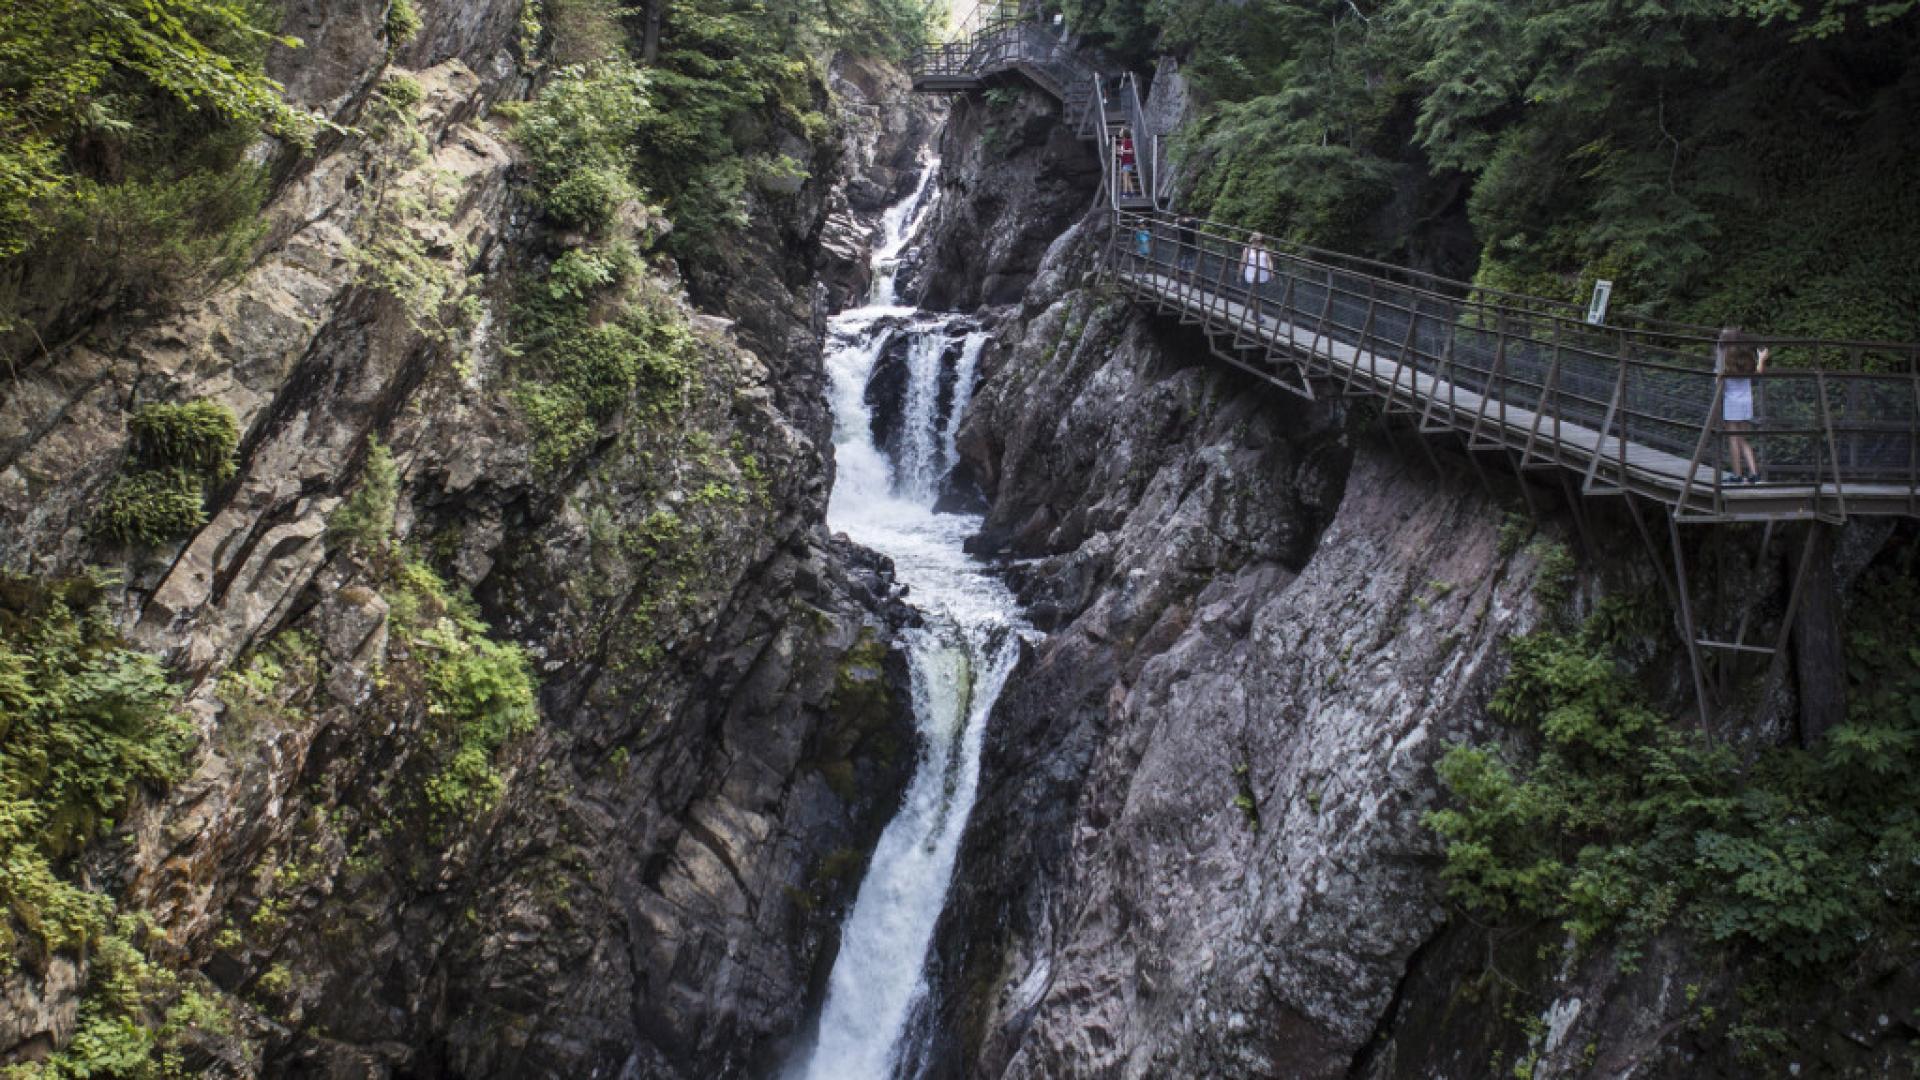 High Falls Gorge